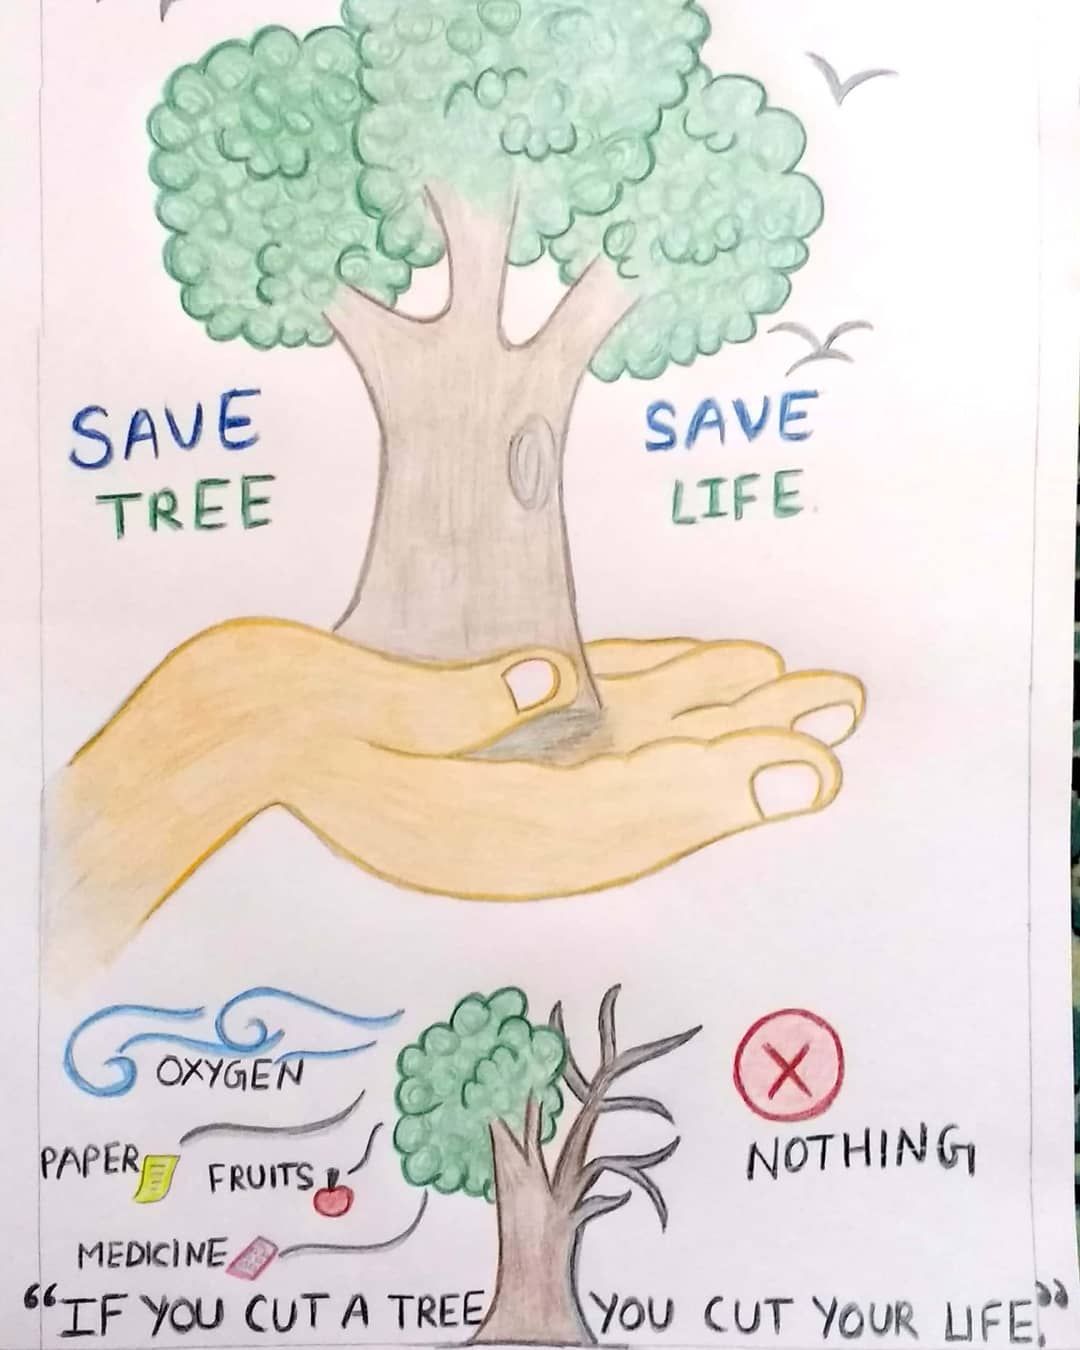 Save Tree save life – India NCC